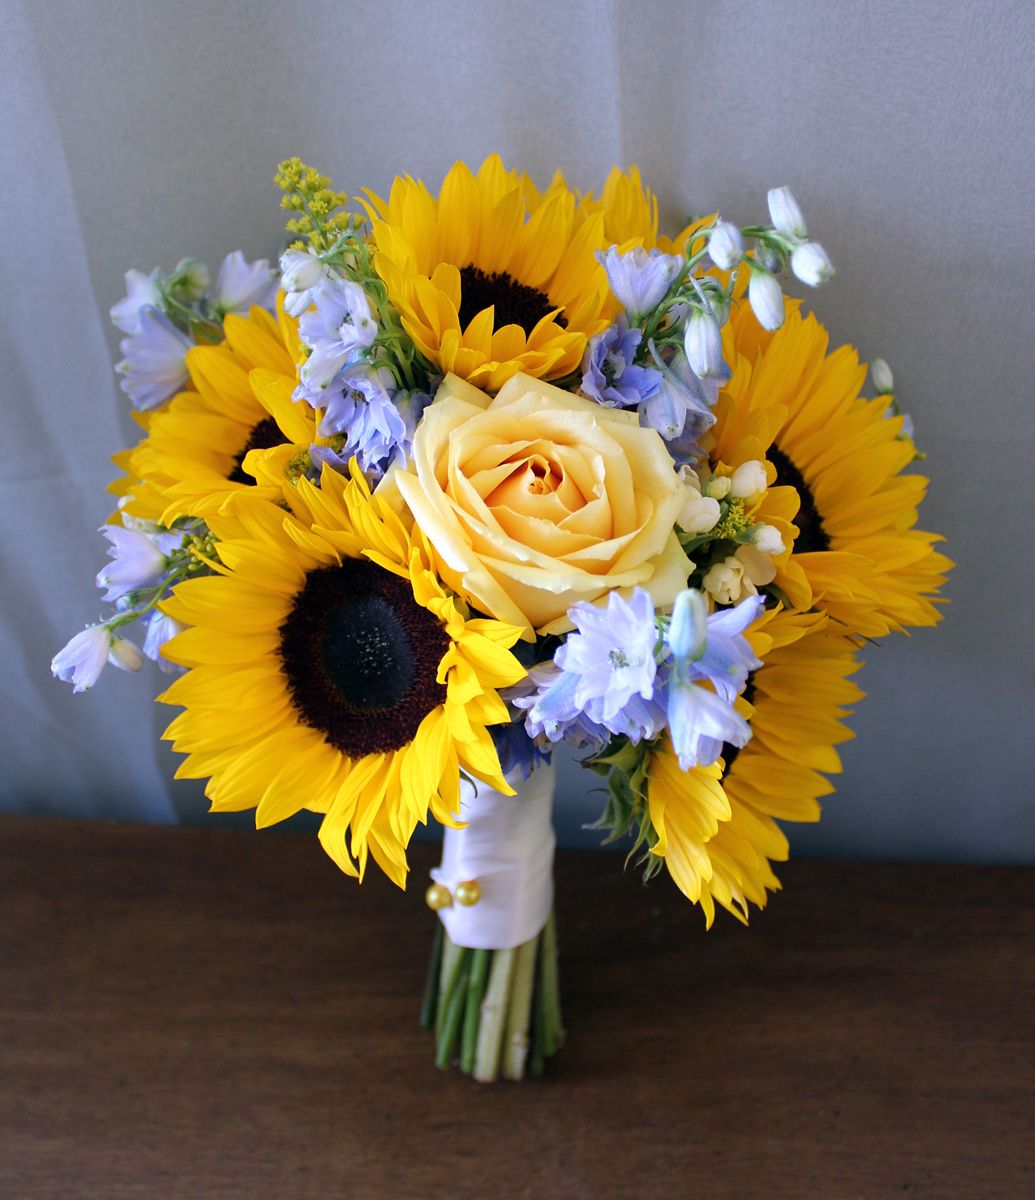 choose daisy wedding bouquet for your wedding 6 - Choose Daisy Wedding Bouquet for Your Wedding